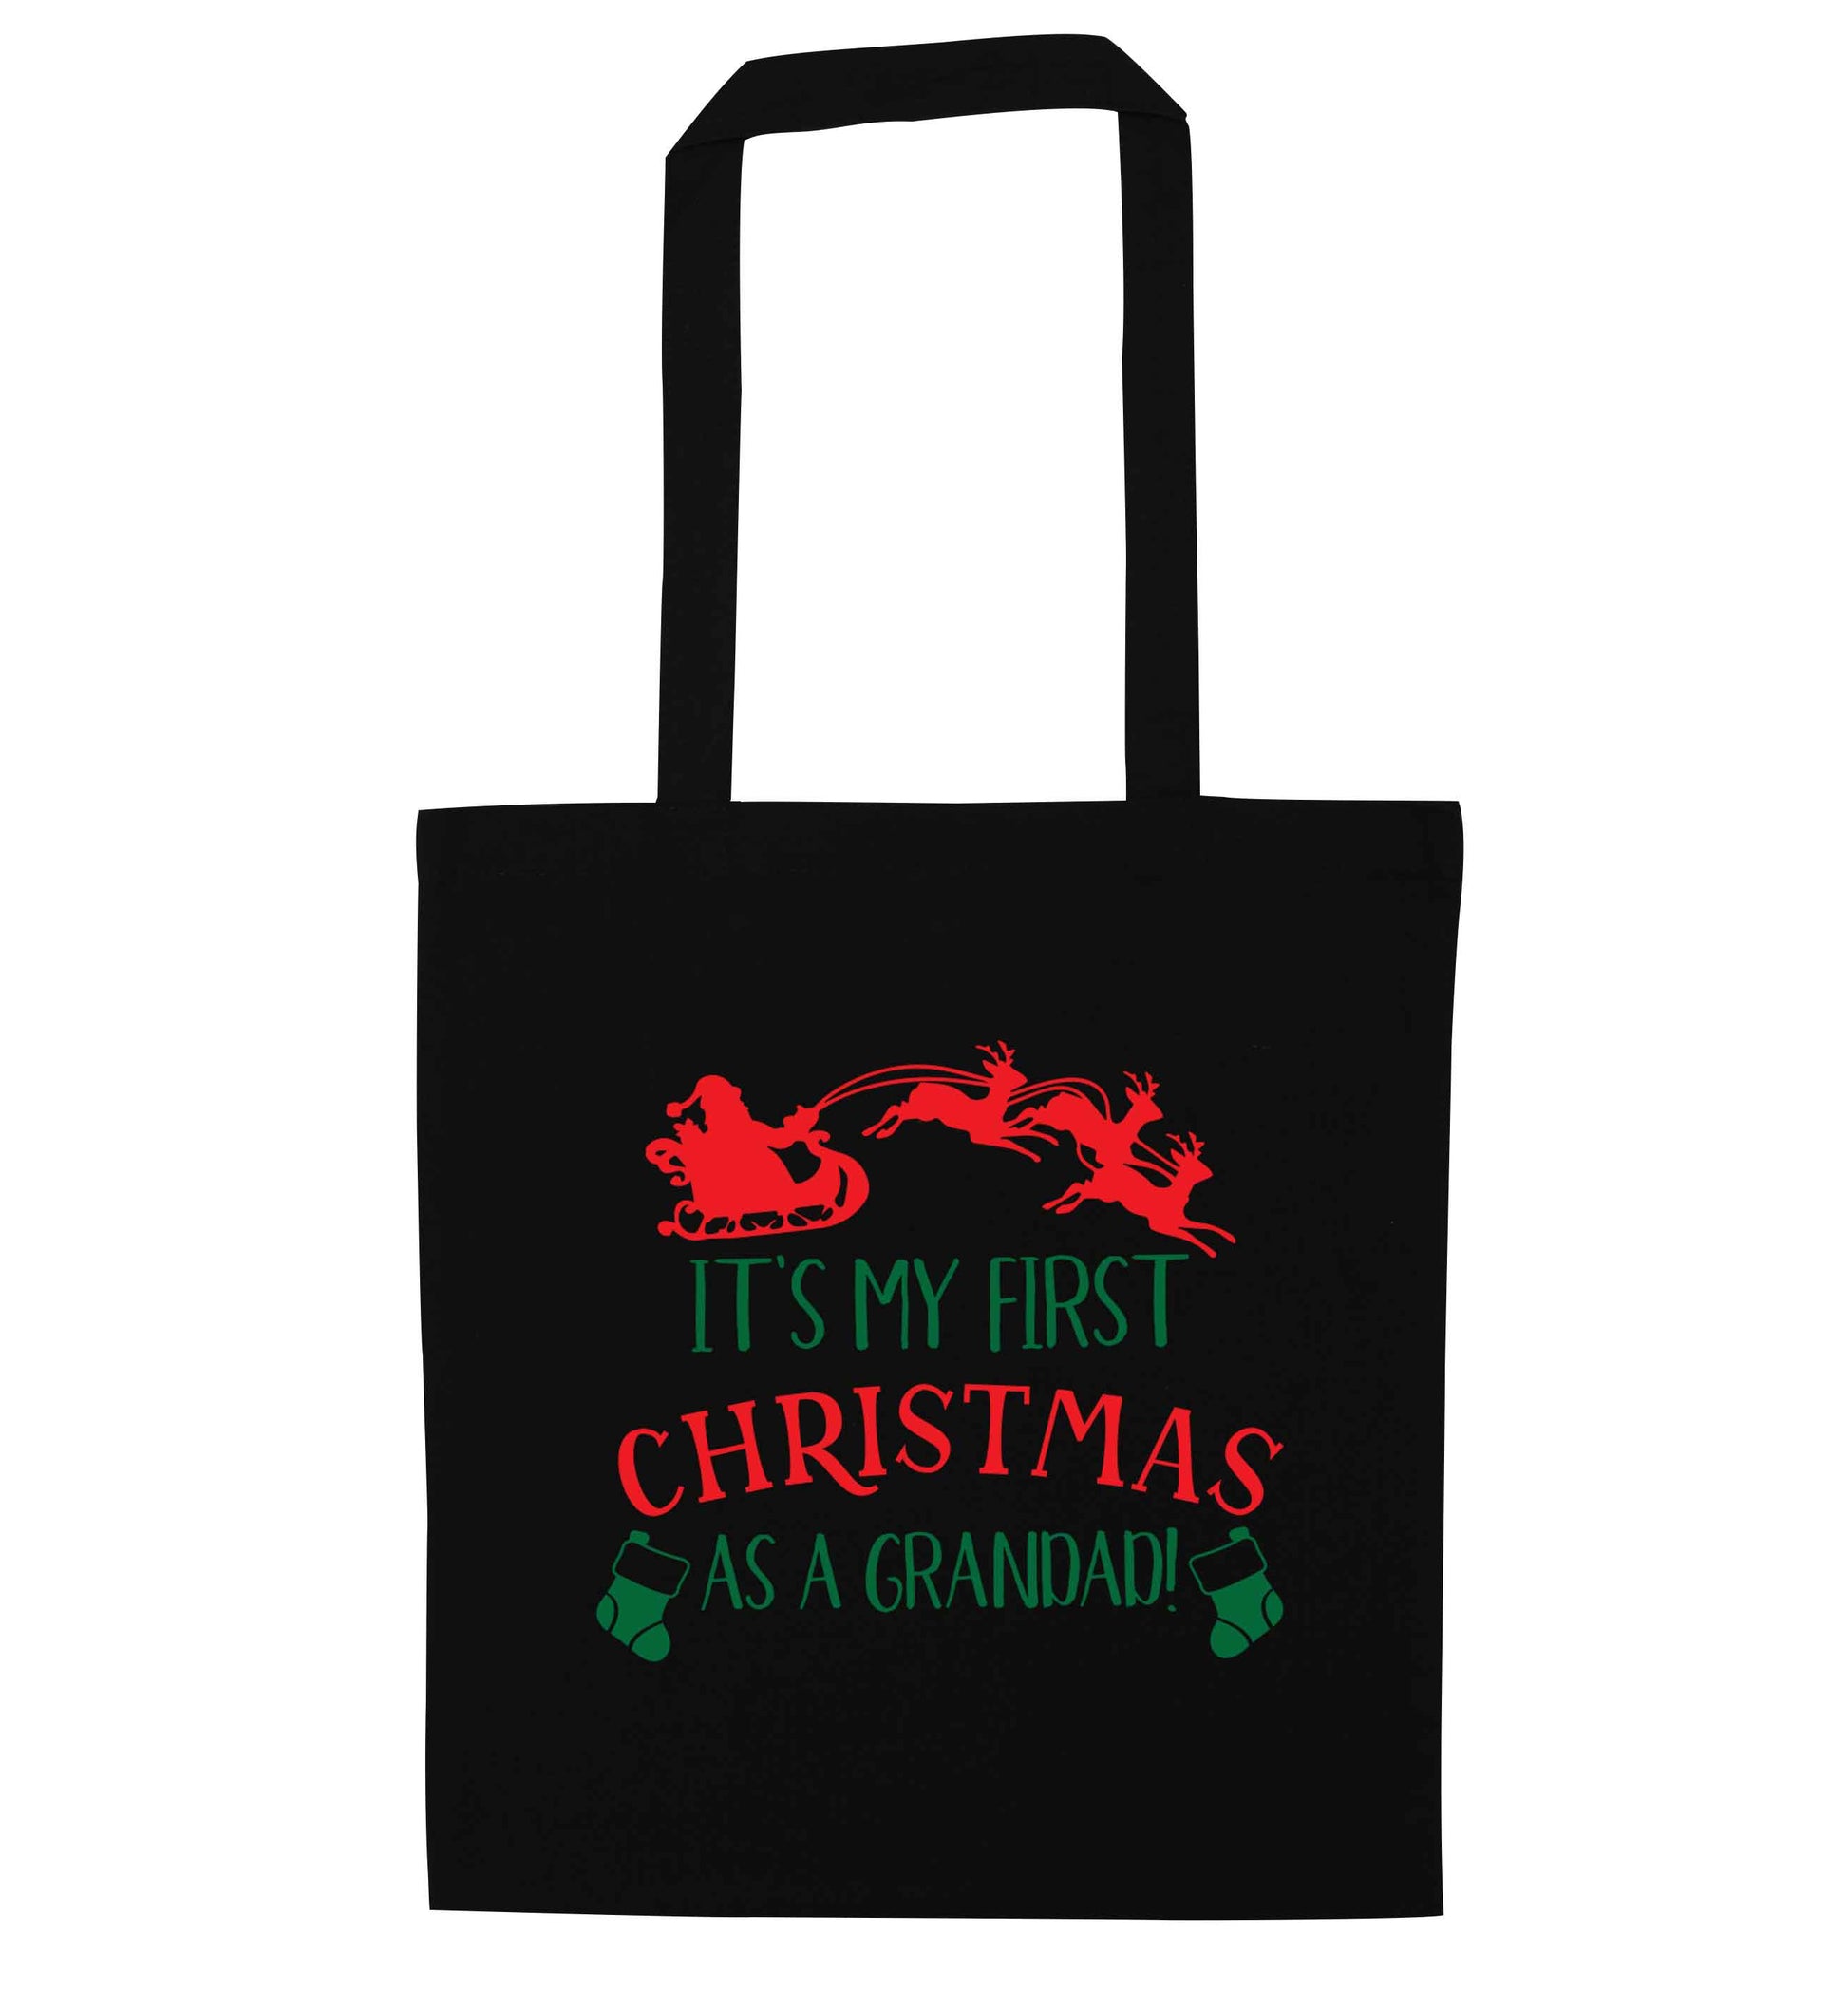 It's my first Christmas as a grandad! black tote bag